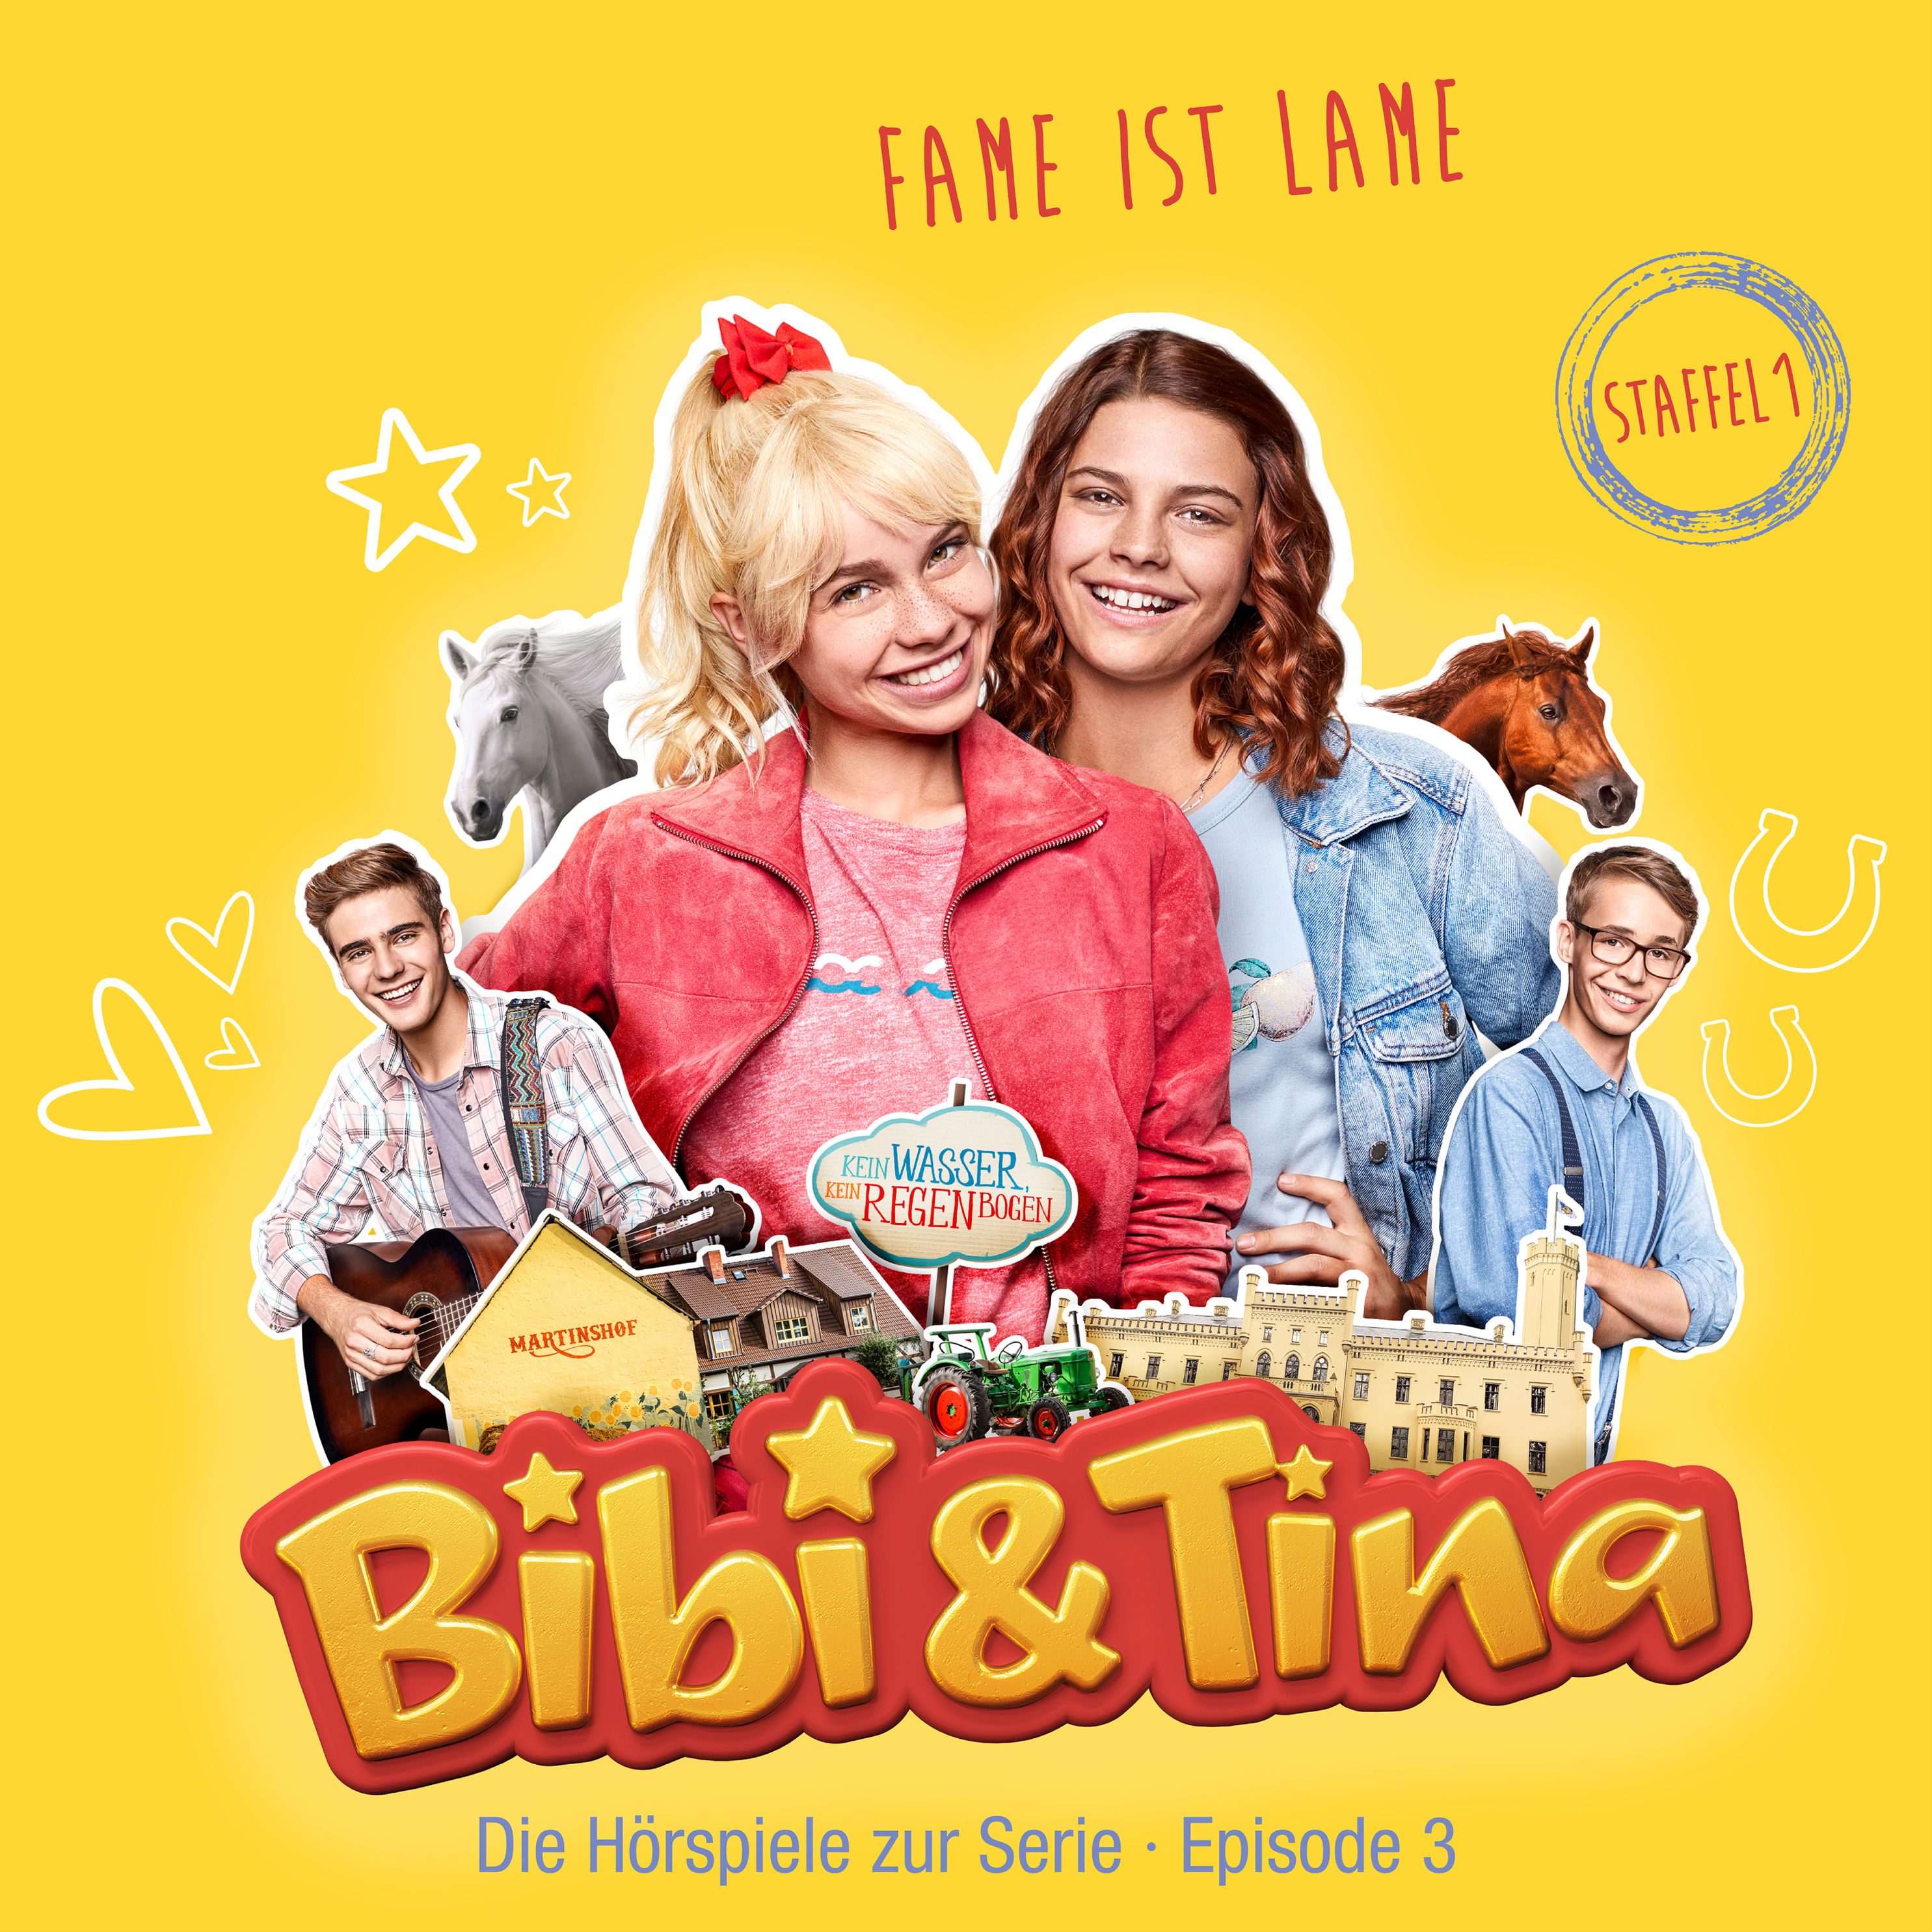 Bibi & Tina - 3 - Bibi & Tina - S1 03: Fame ist Lame Hörspiel zur Serie  Hörbuch Download